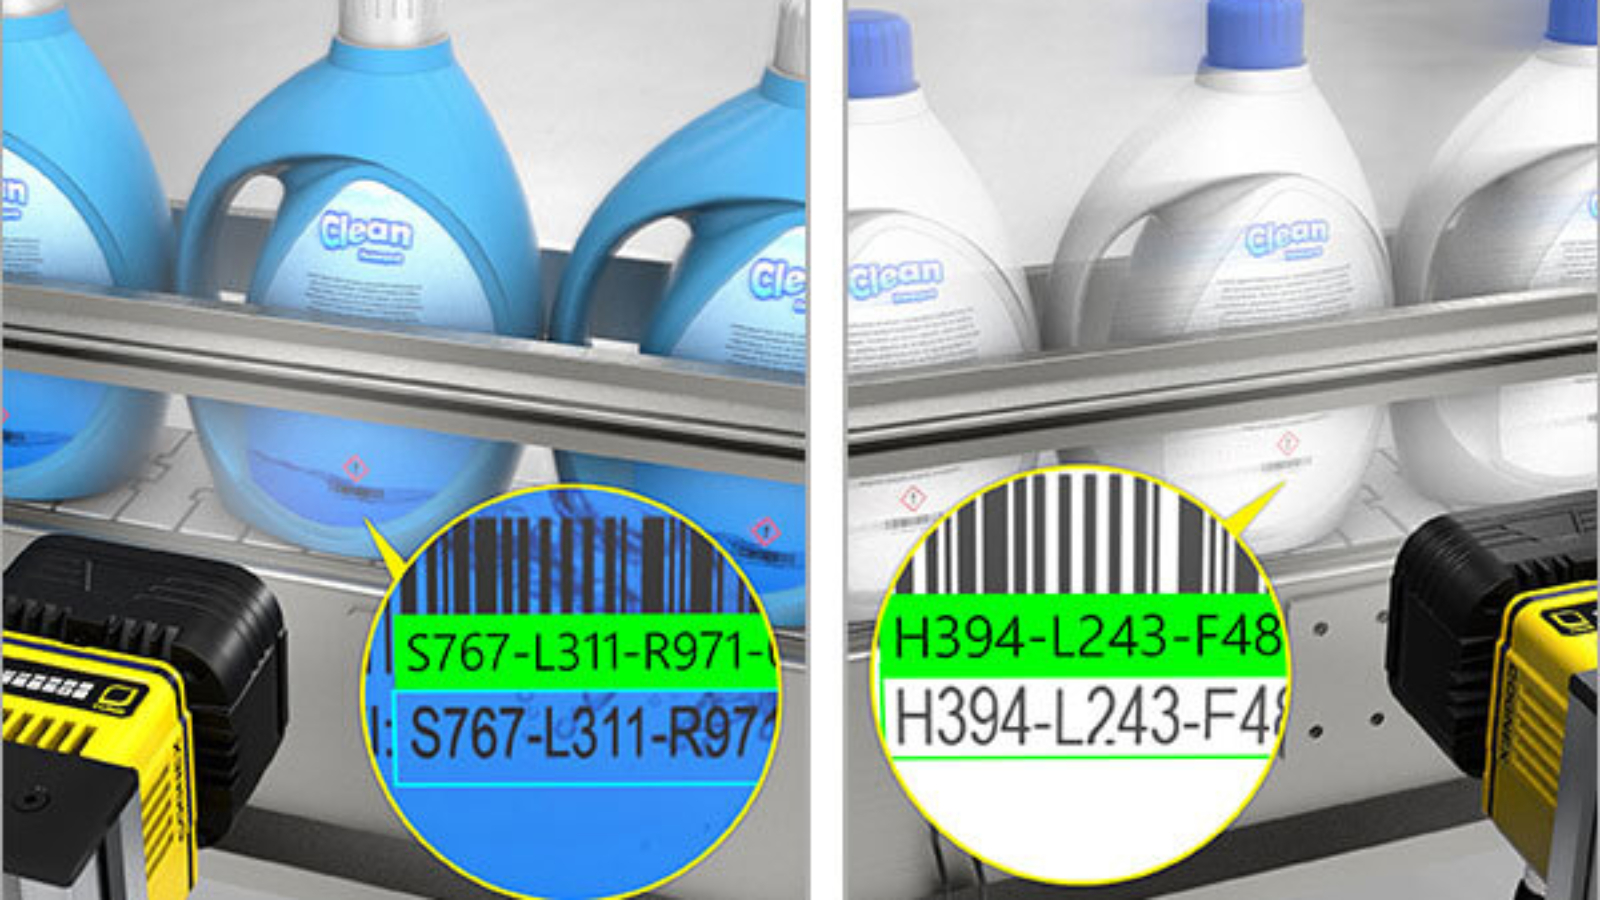 detergent-bottle-label-reading-is-3800